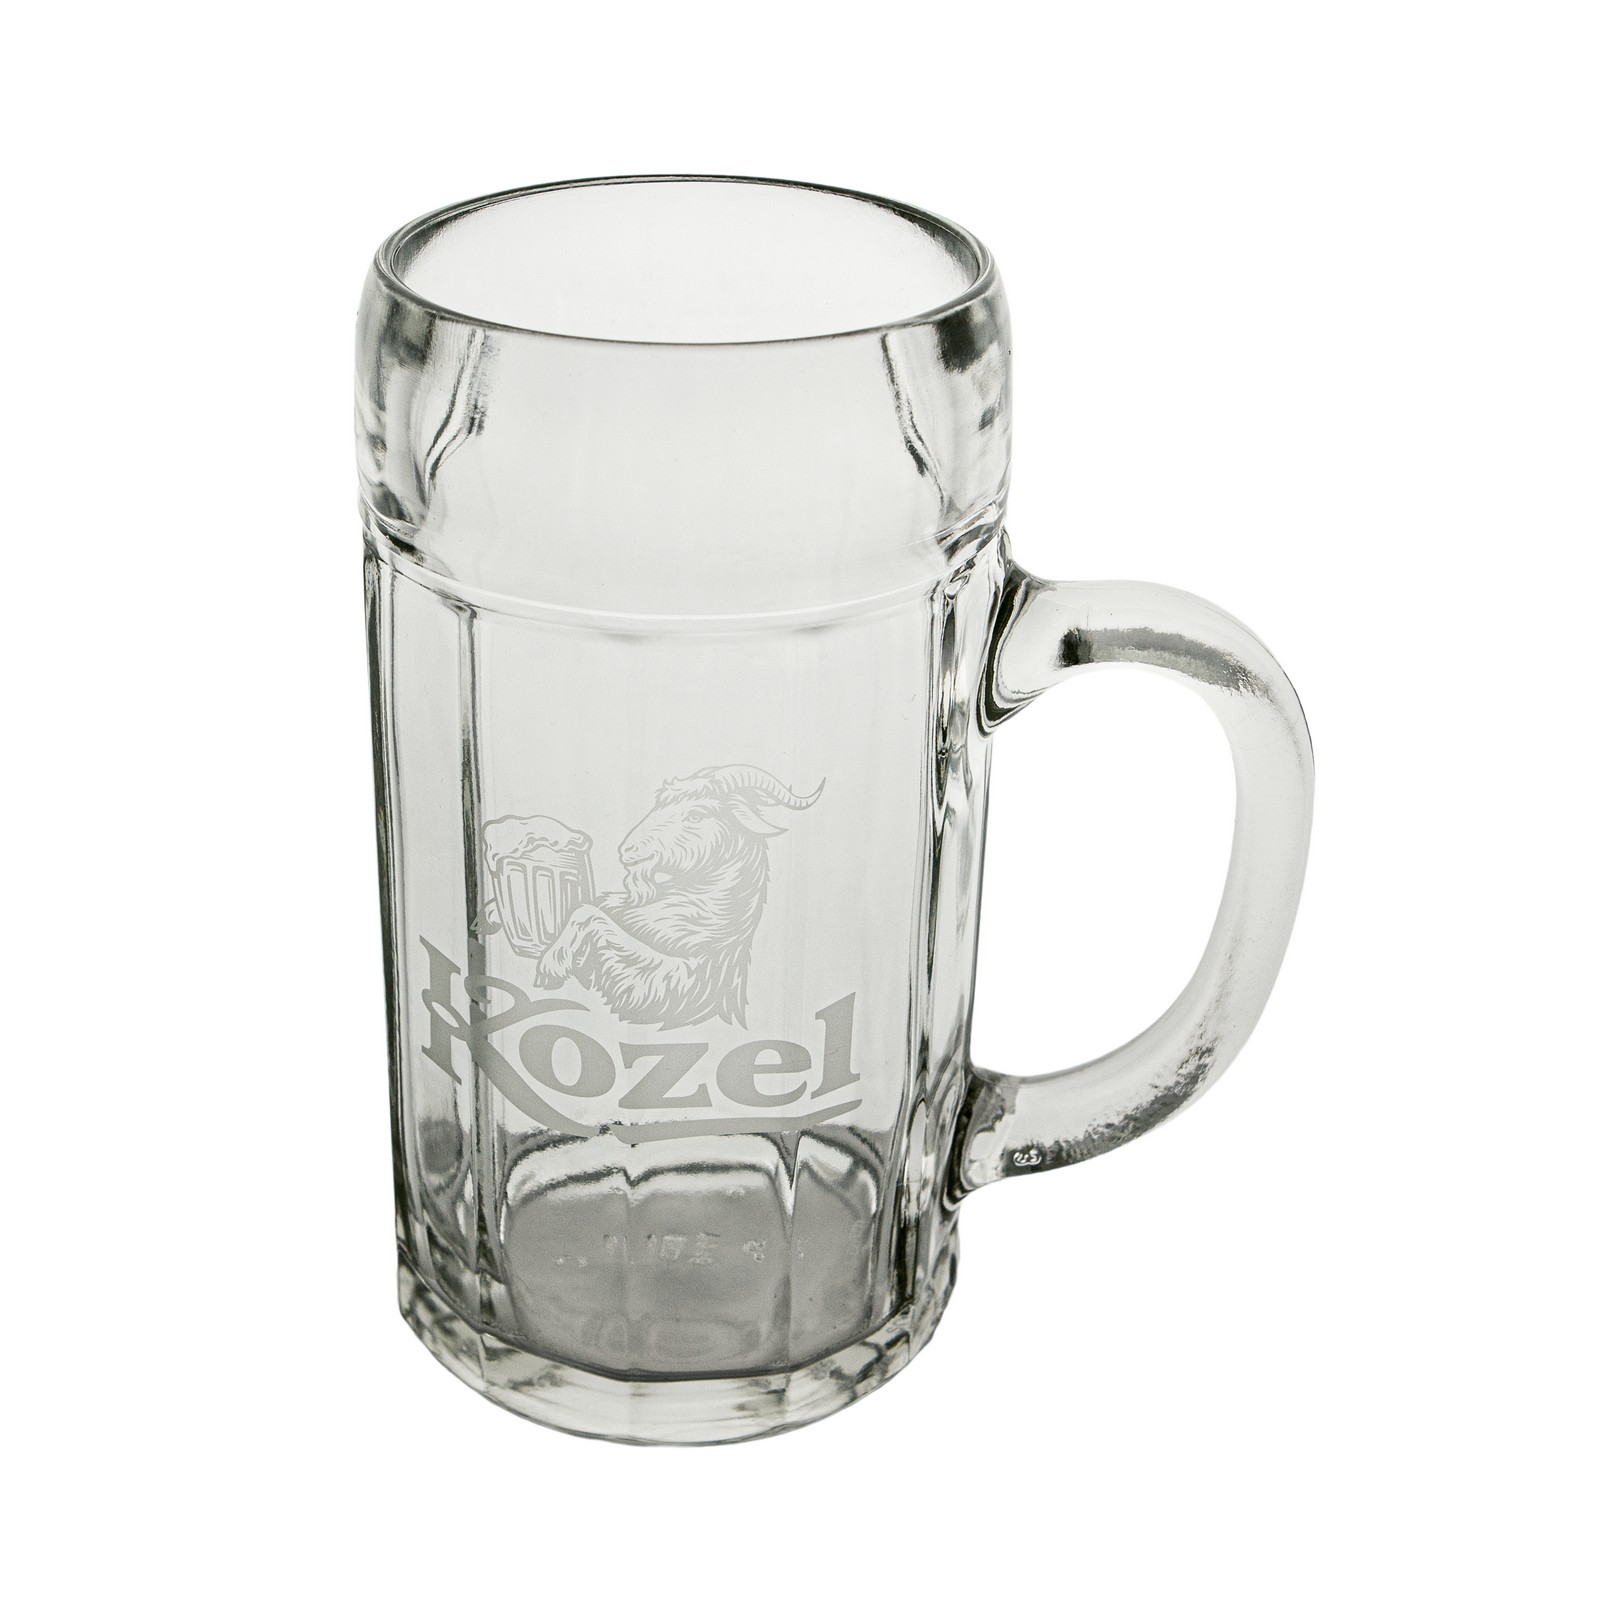 1 l Kozel beer mug